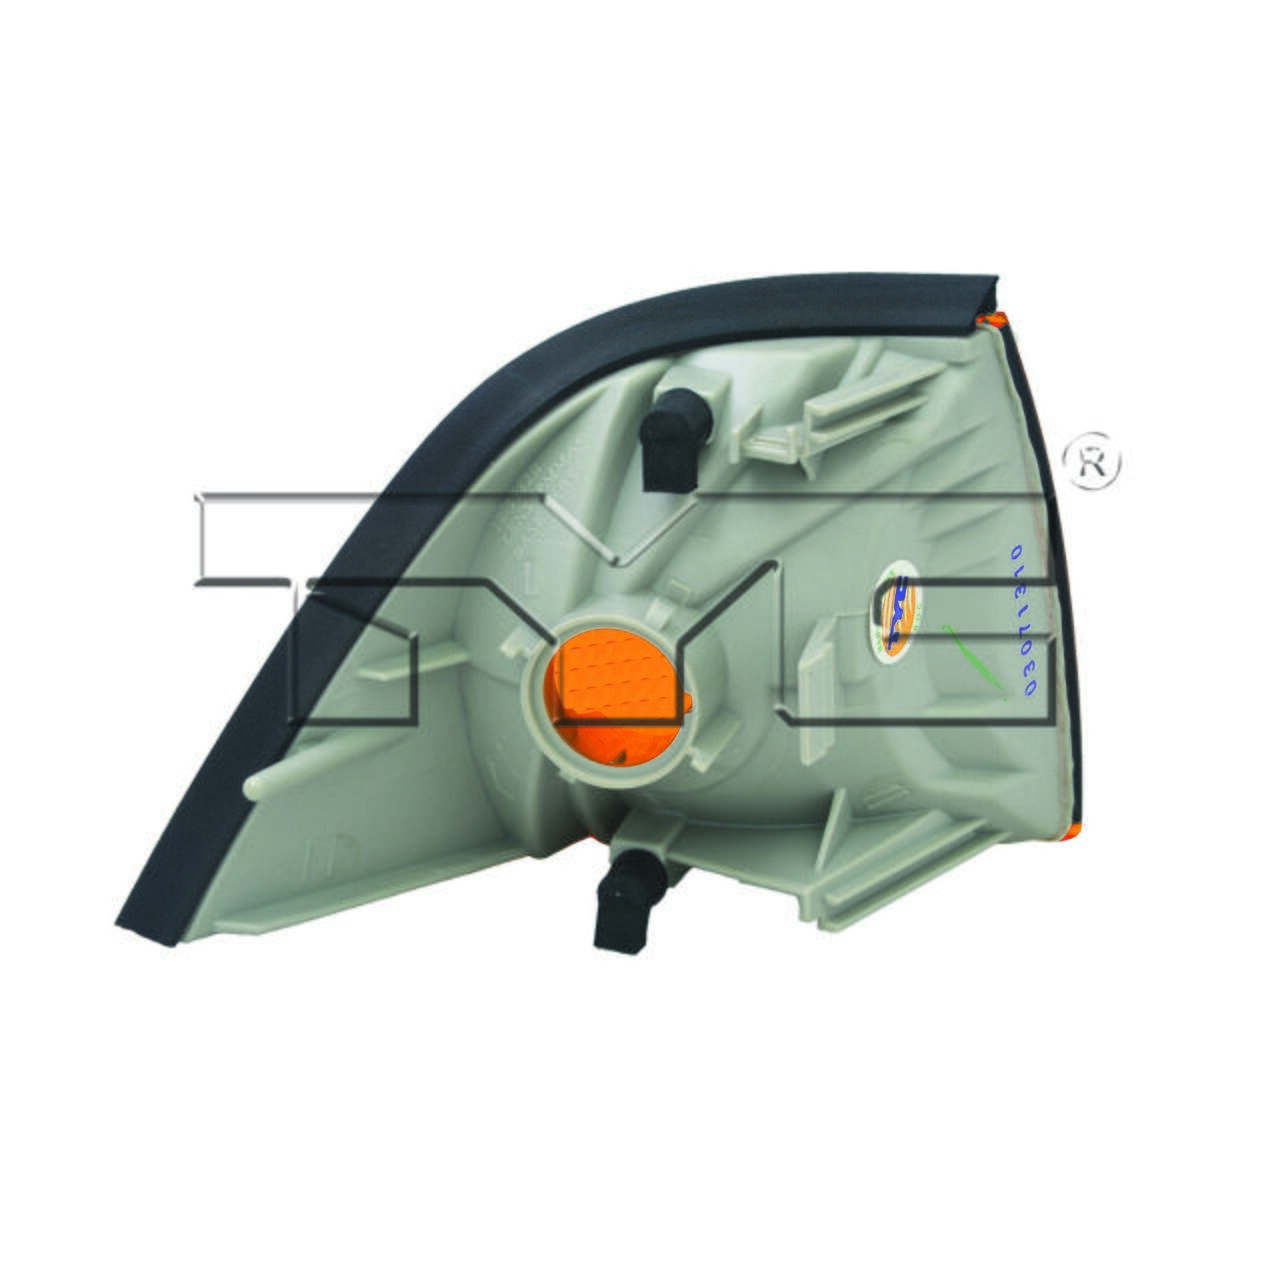 BMW Turnsignal Light - Driver Side (Amber) (NSF) 63138353283 - TYC 185982011